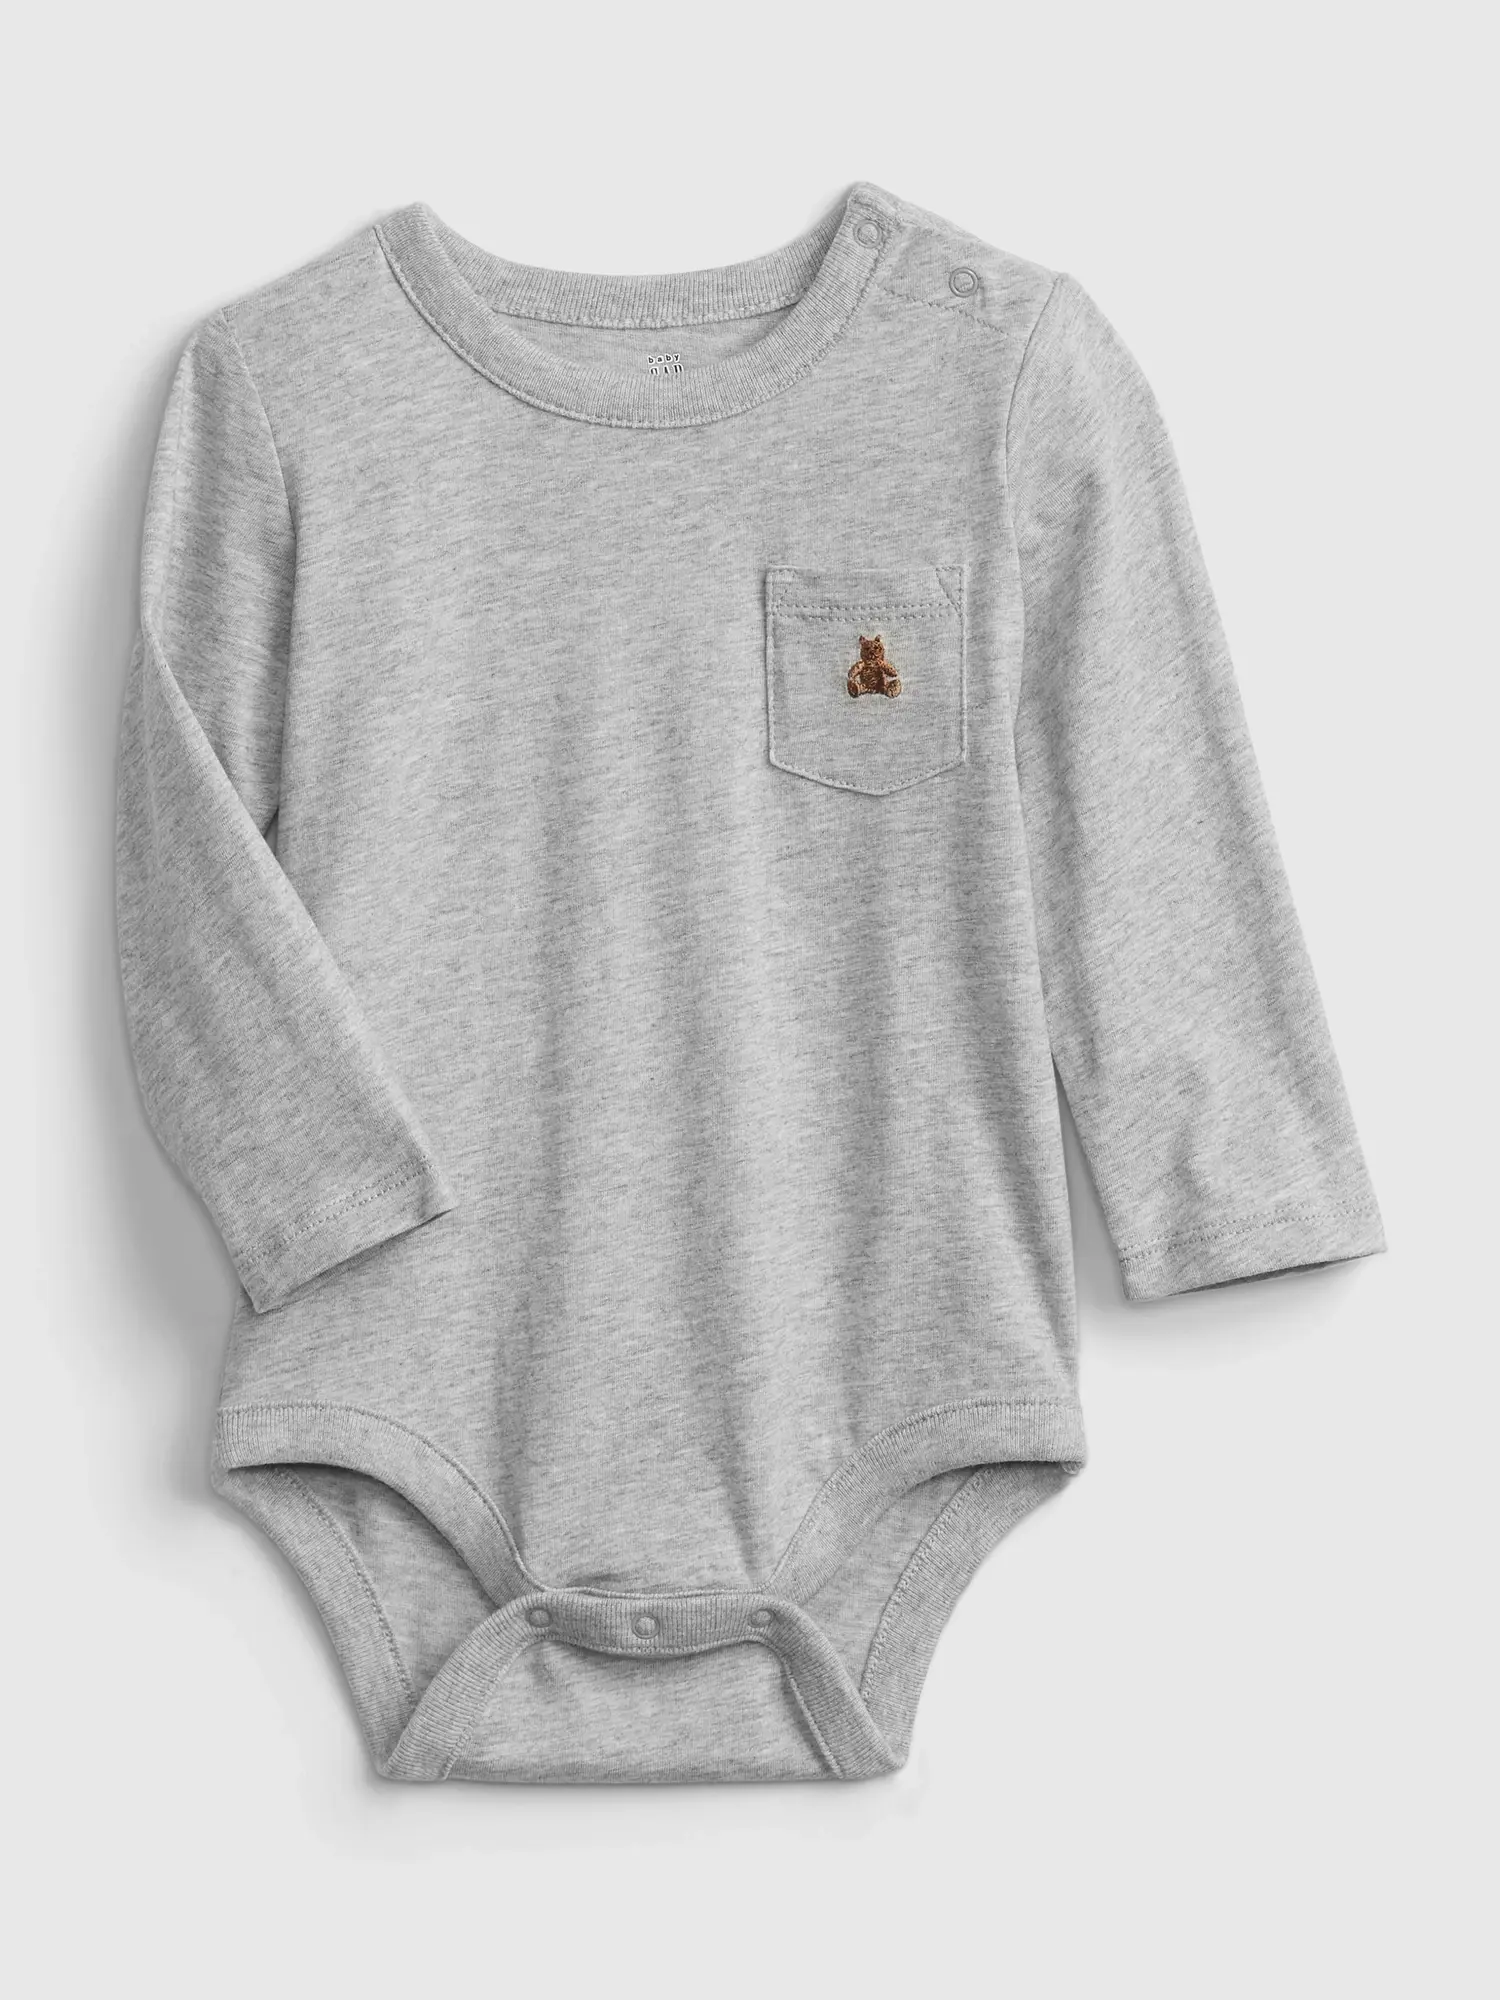 Gap Baby Organic Cotton Mix and Match Pocket Bodysuit gray. 1